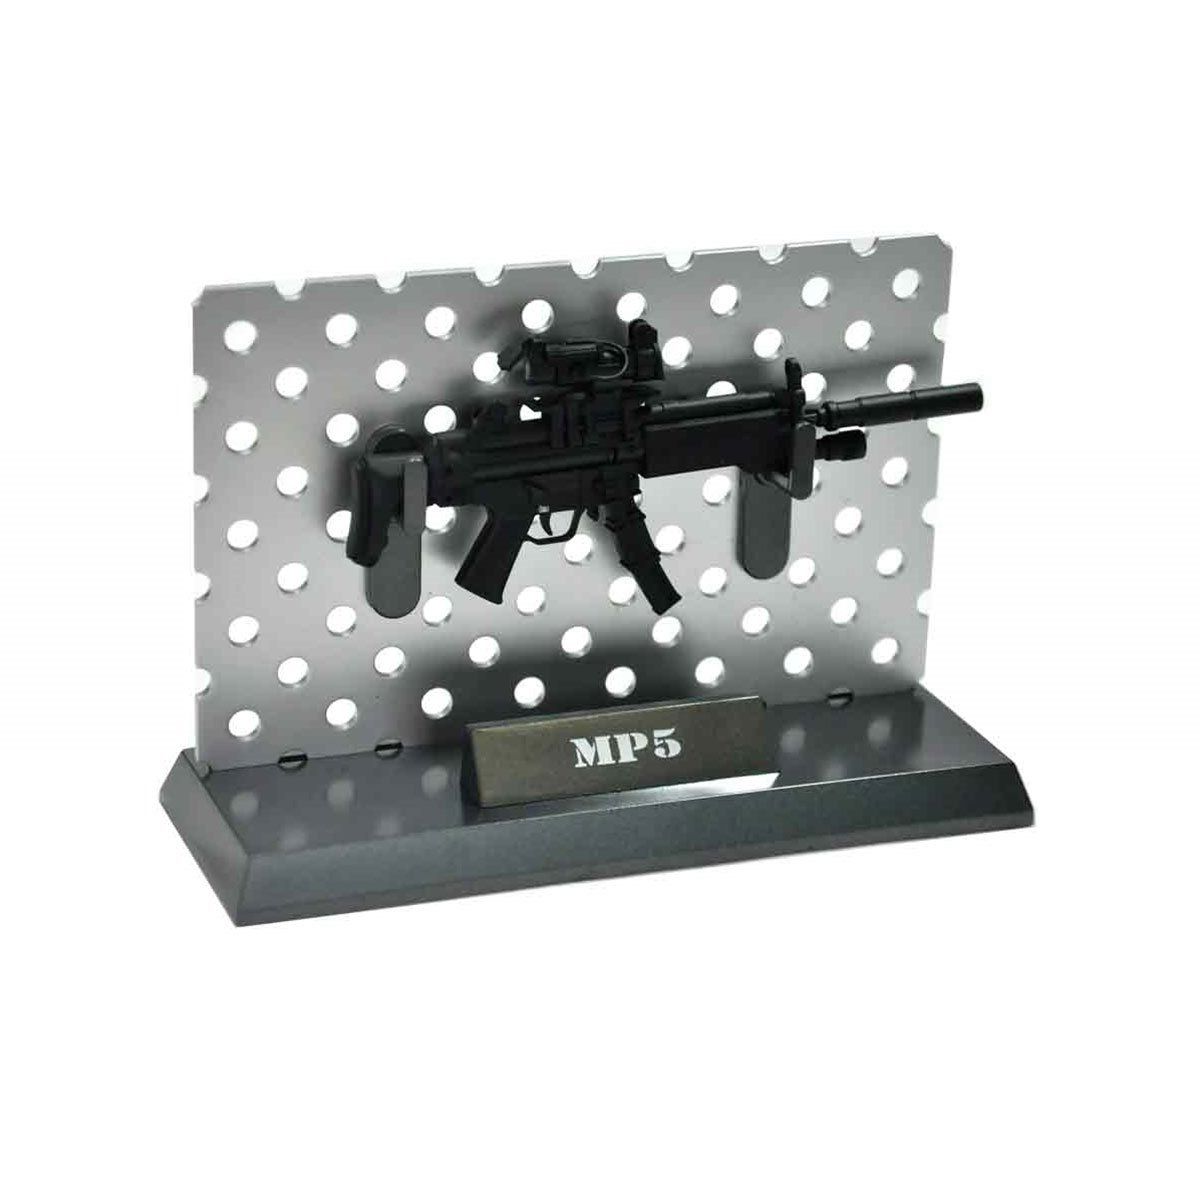 Miniatura MP5 Arsenal Guns - Casa Caça e Pesca do Rio